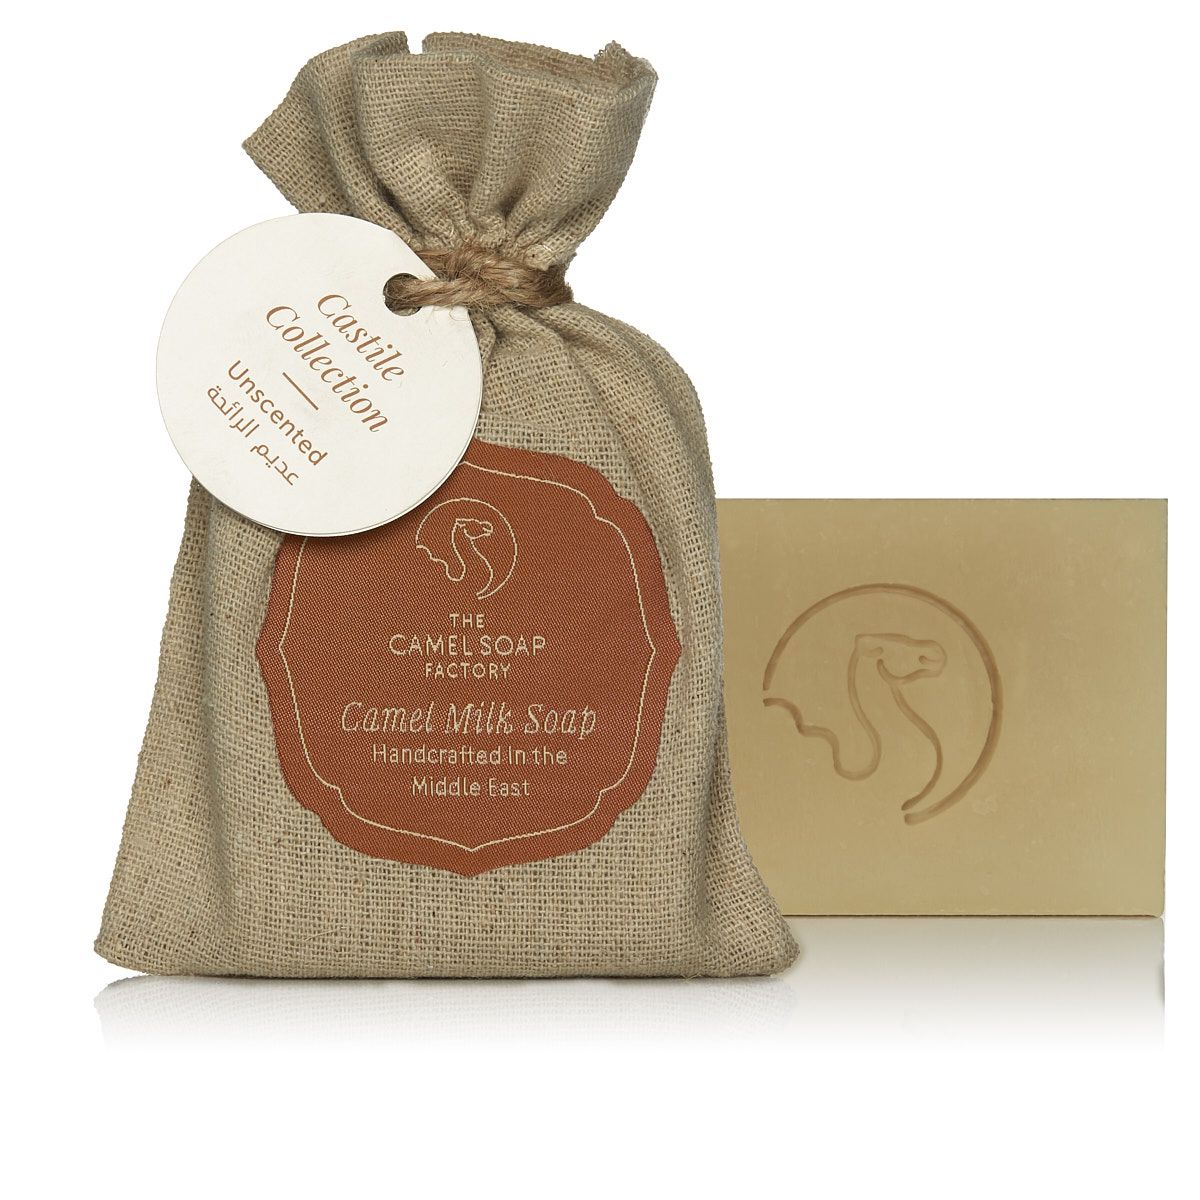 Camel milk soap Unscented - Castile Collection